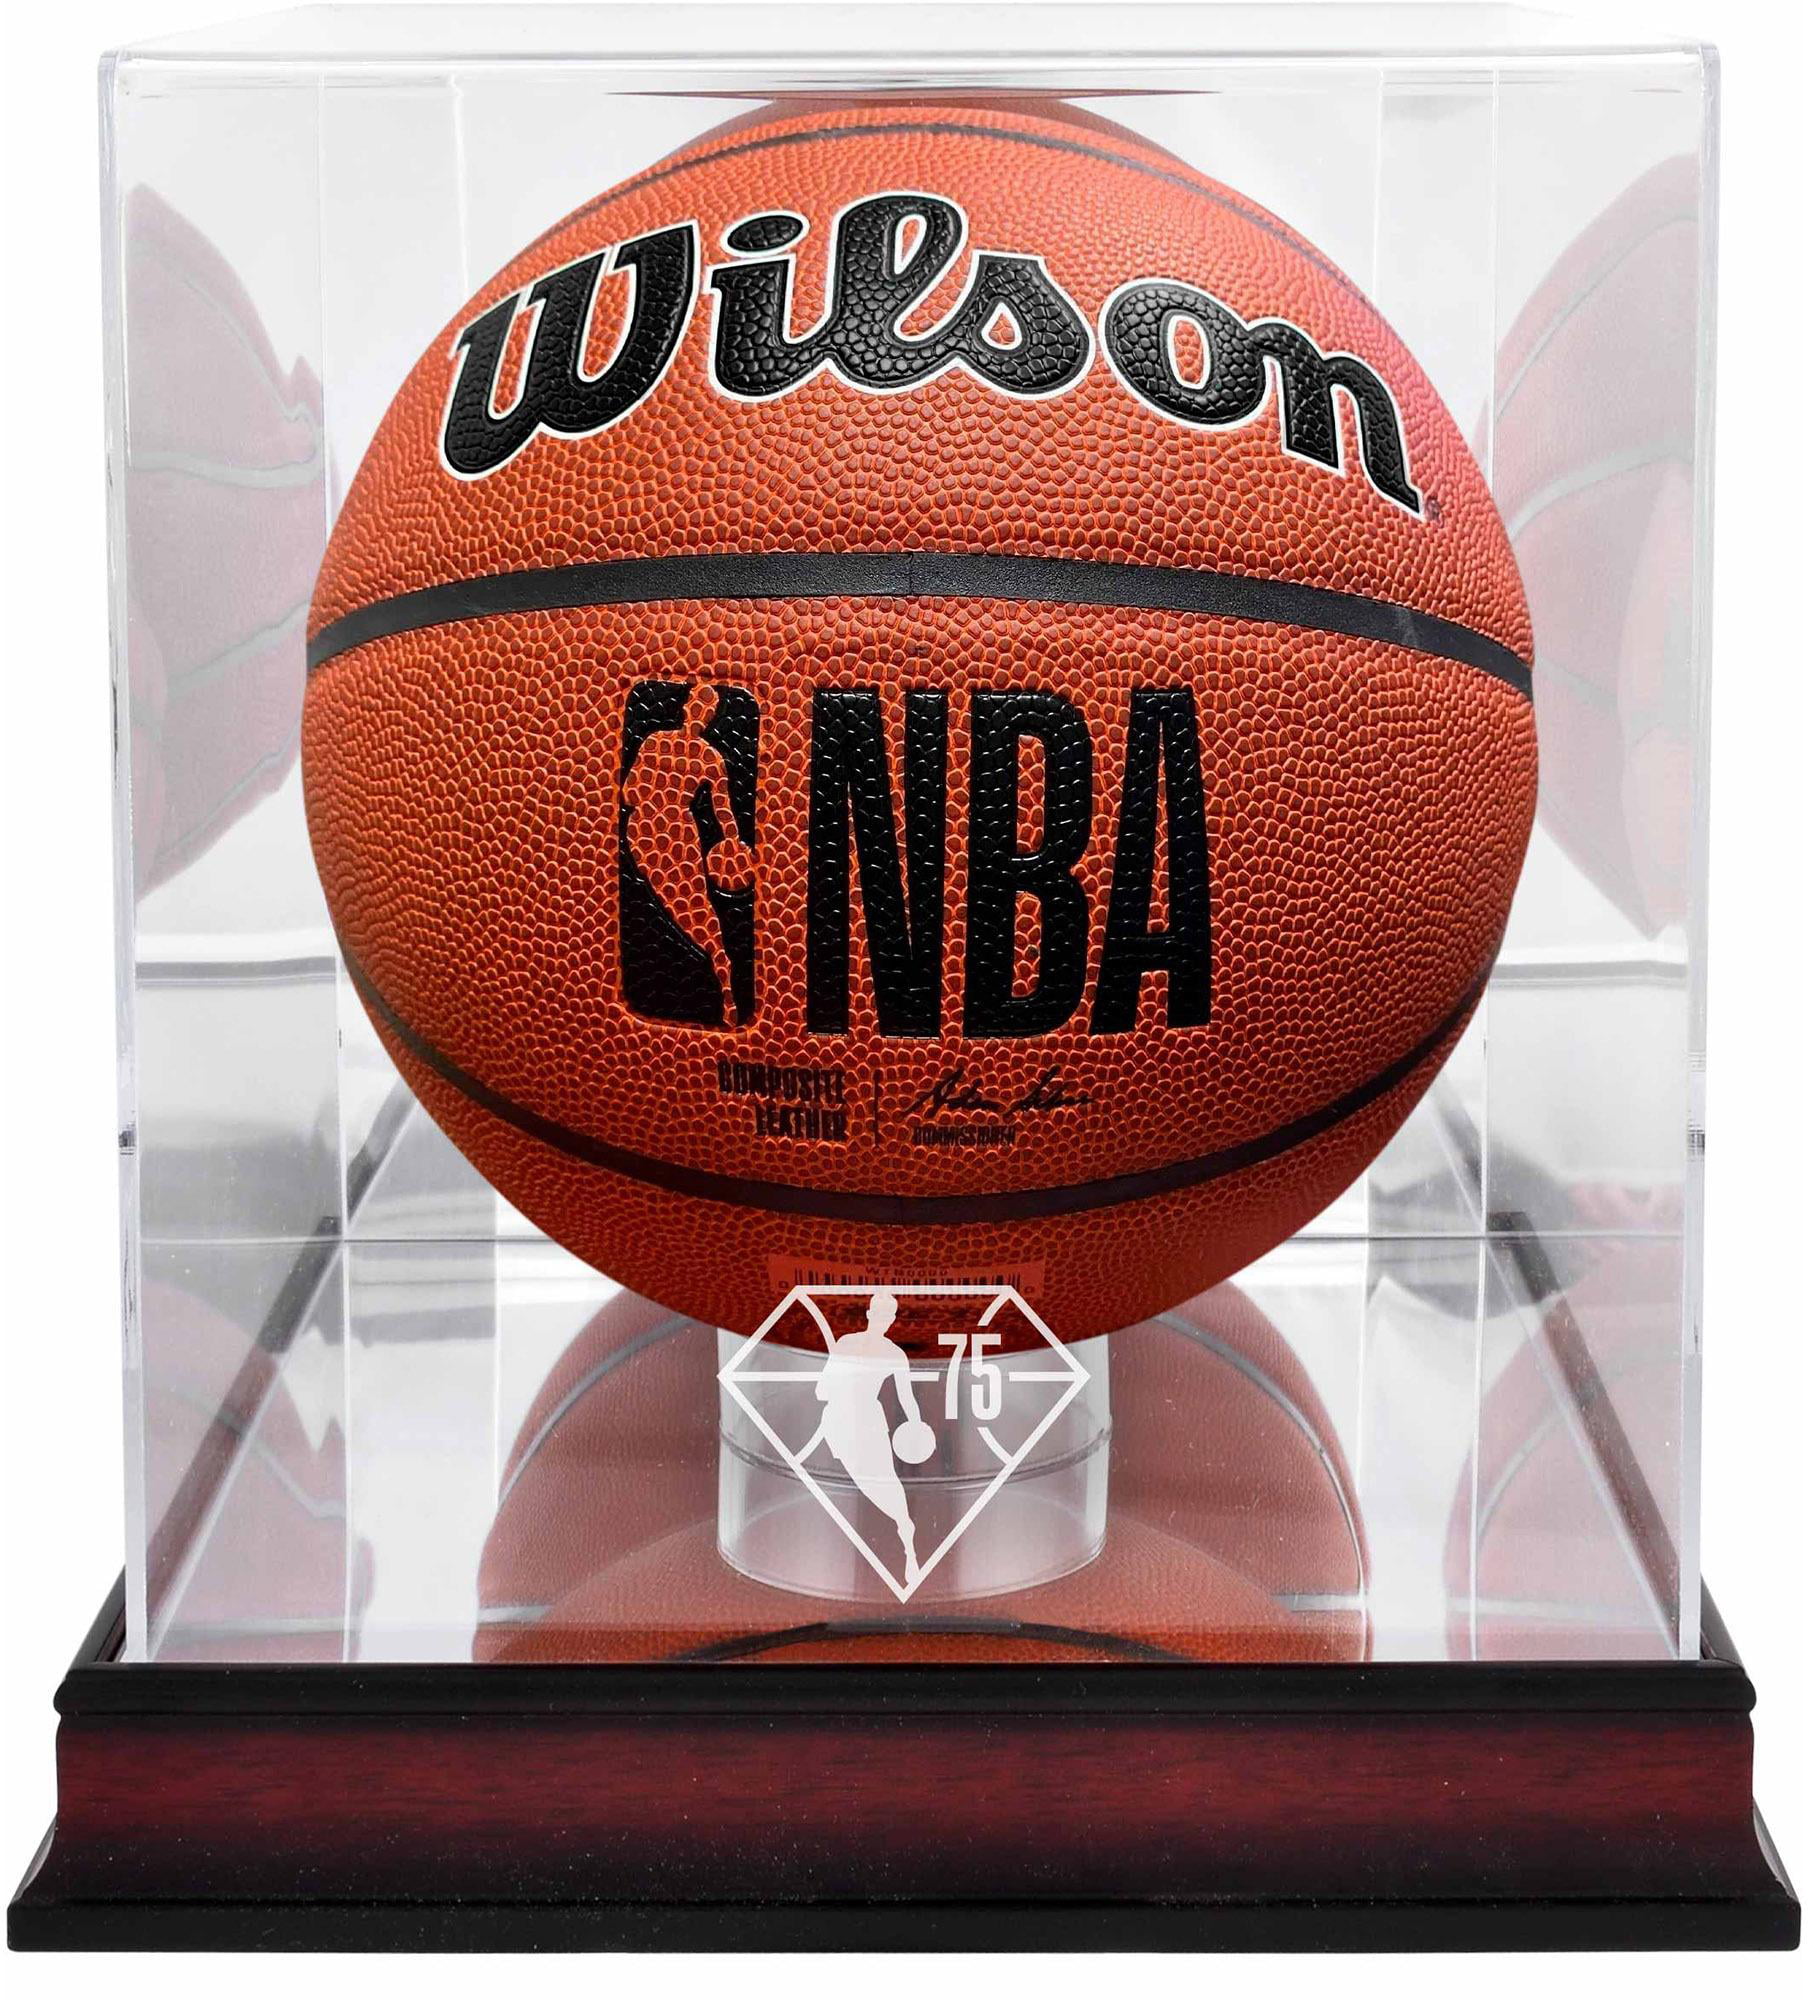 Basketball Free Standing Display Cases Sports Memorabilia Detroit Pistons Mahogany Team Logo Basketball Display Case with Mirrored Back 